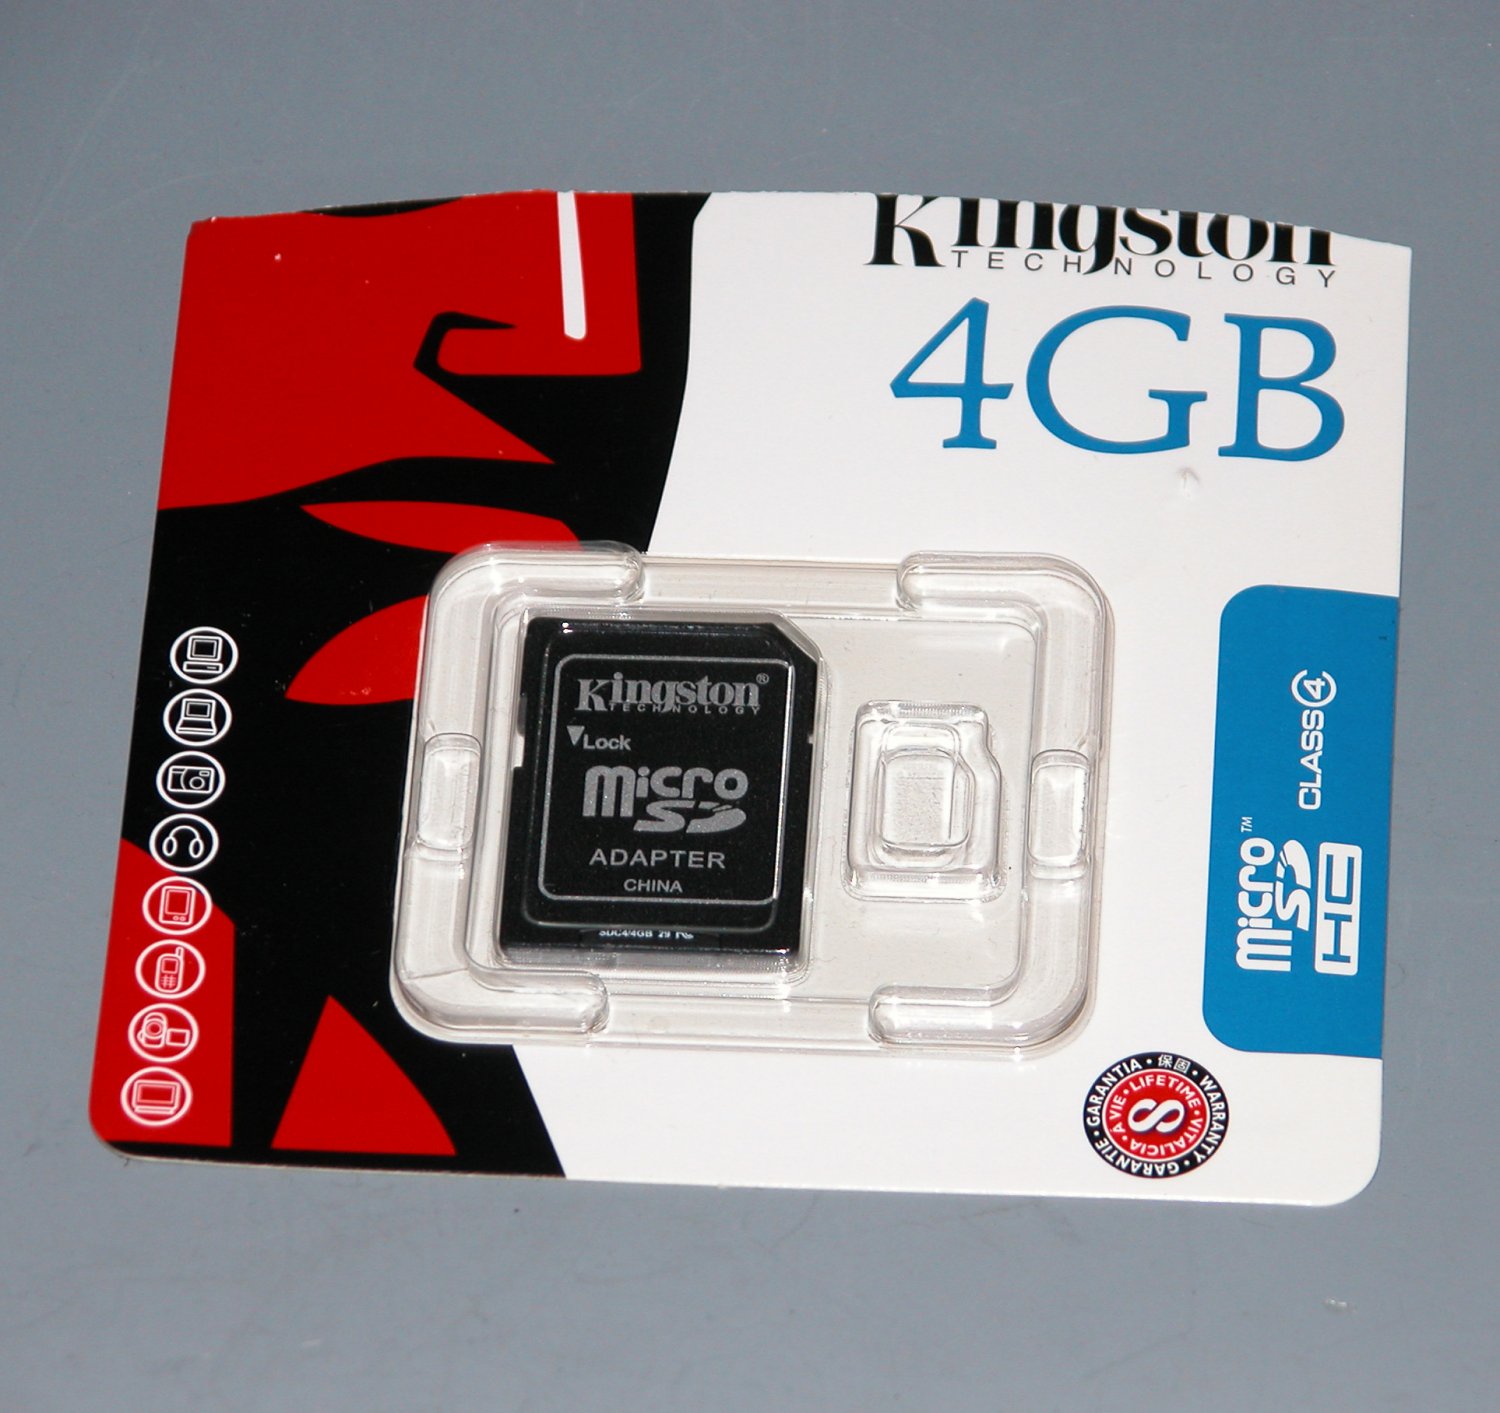 Kingston 4GB microSDHC Class 4 Memory Card